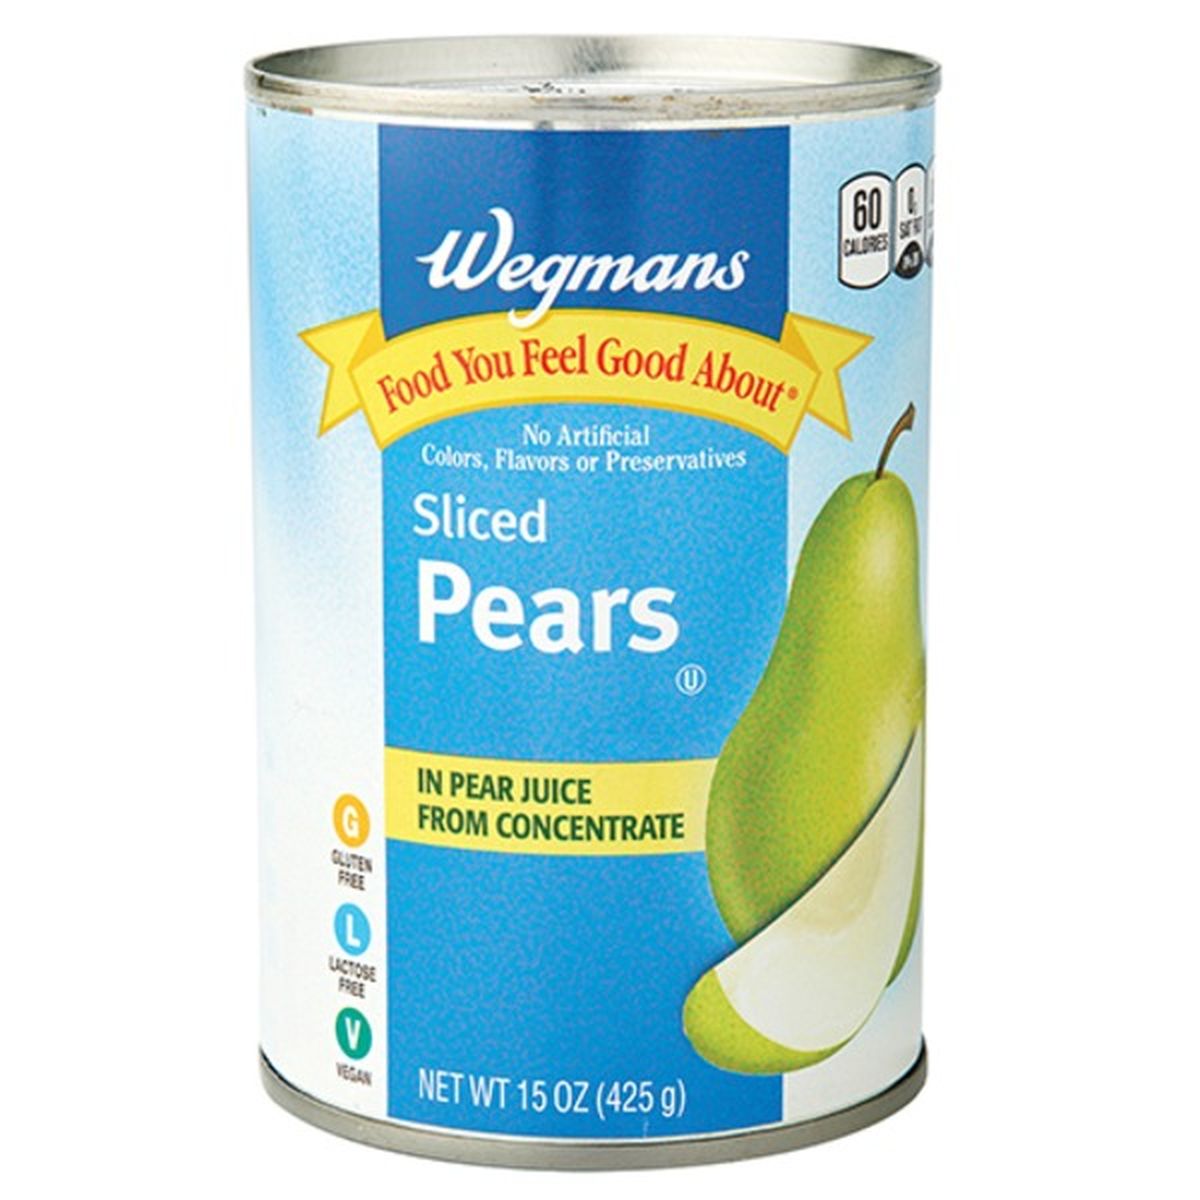 Calories in Wegmans Sliced Pears in Pear Juice